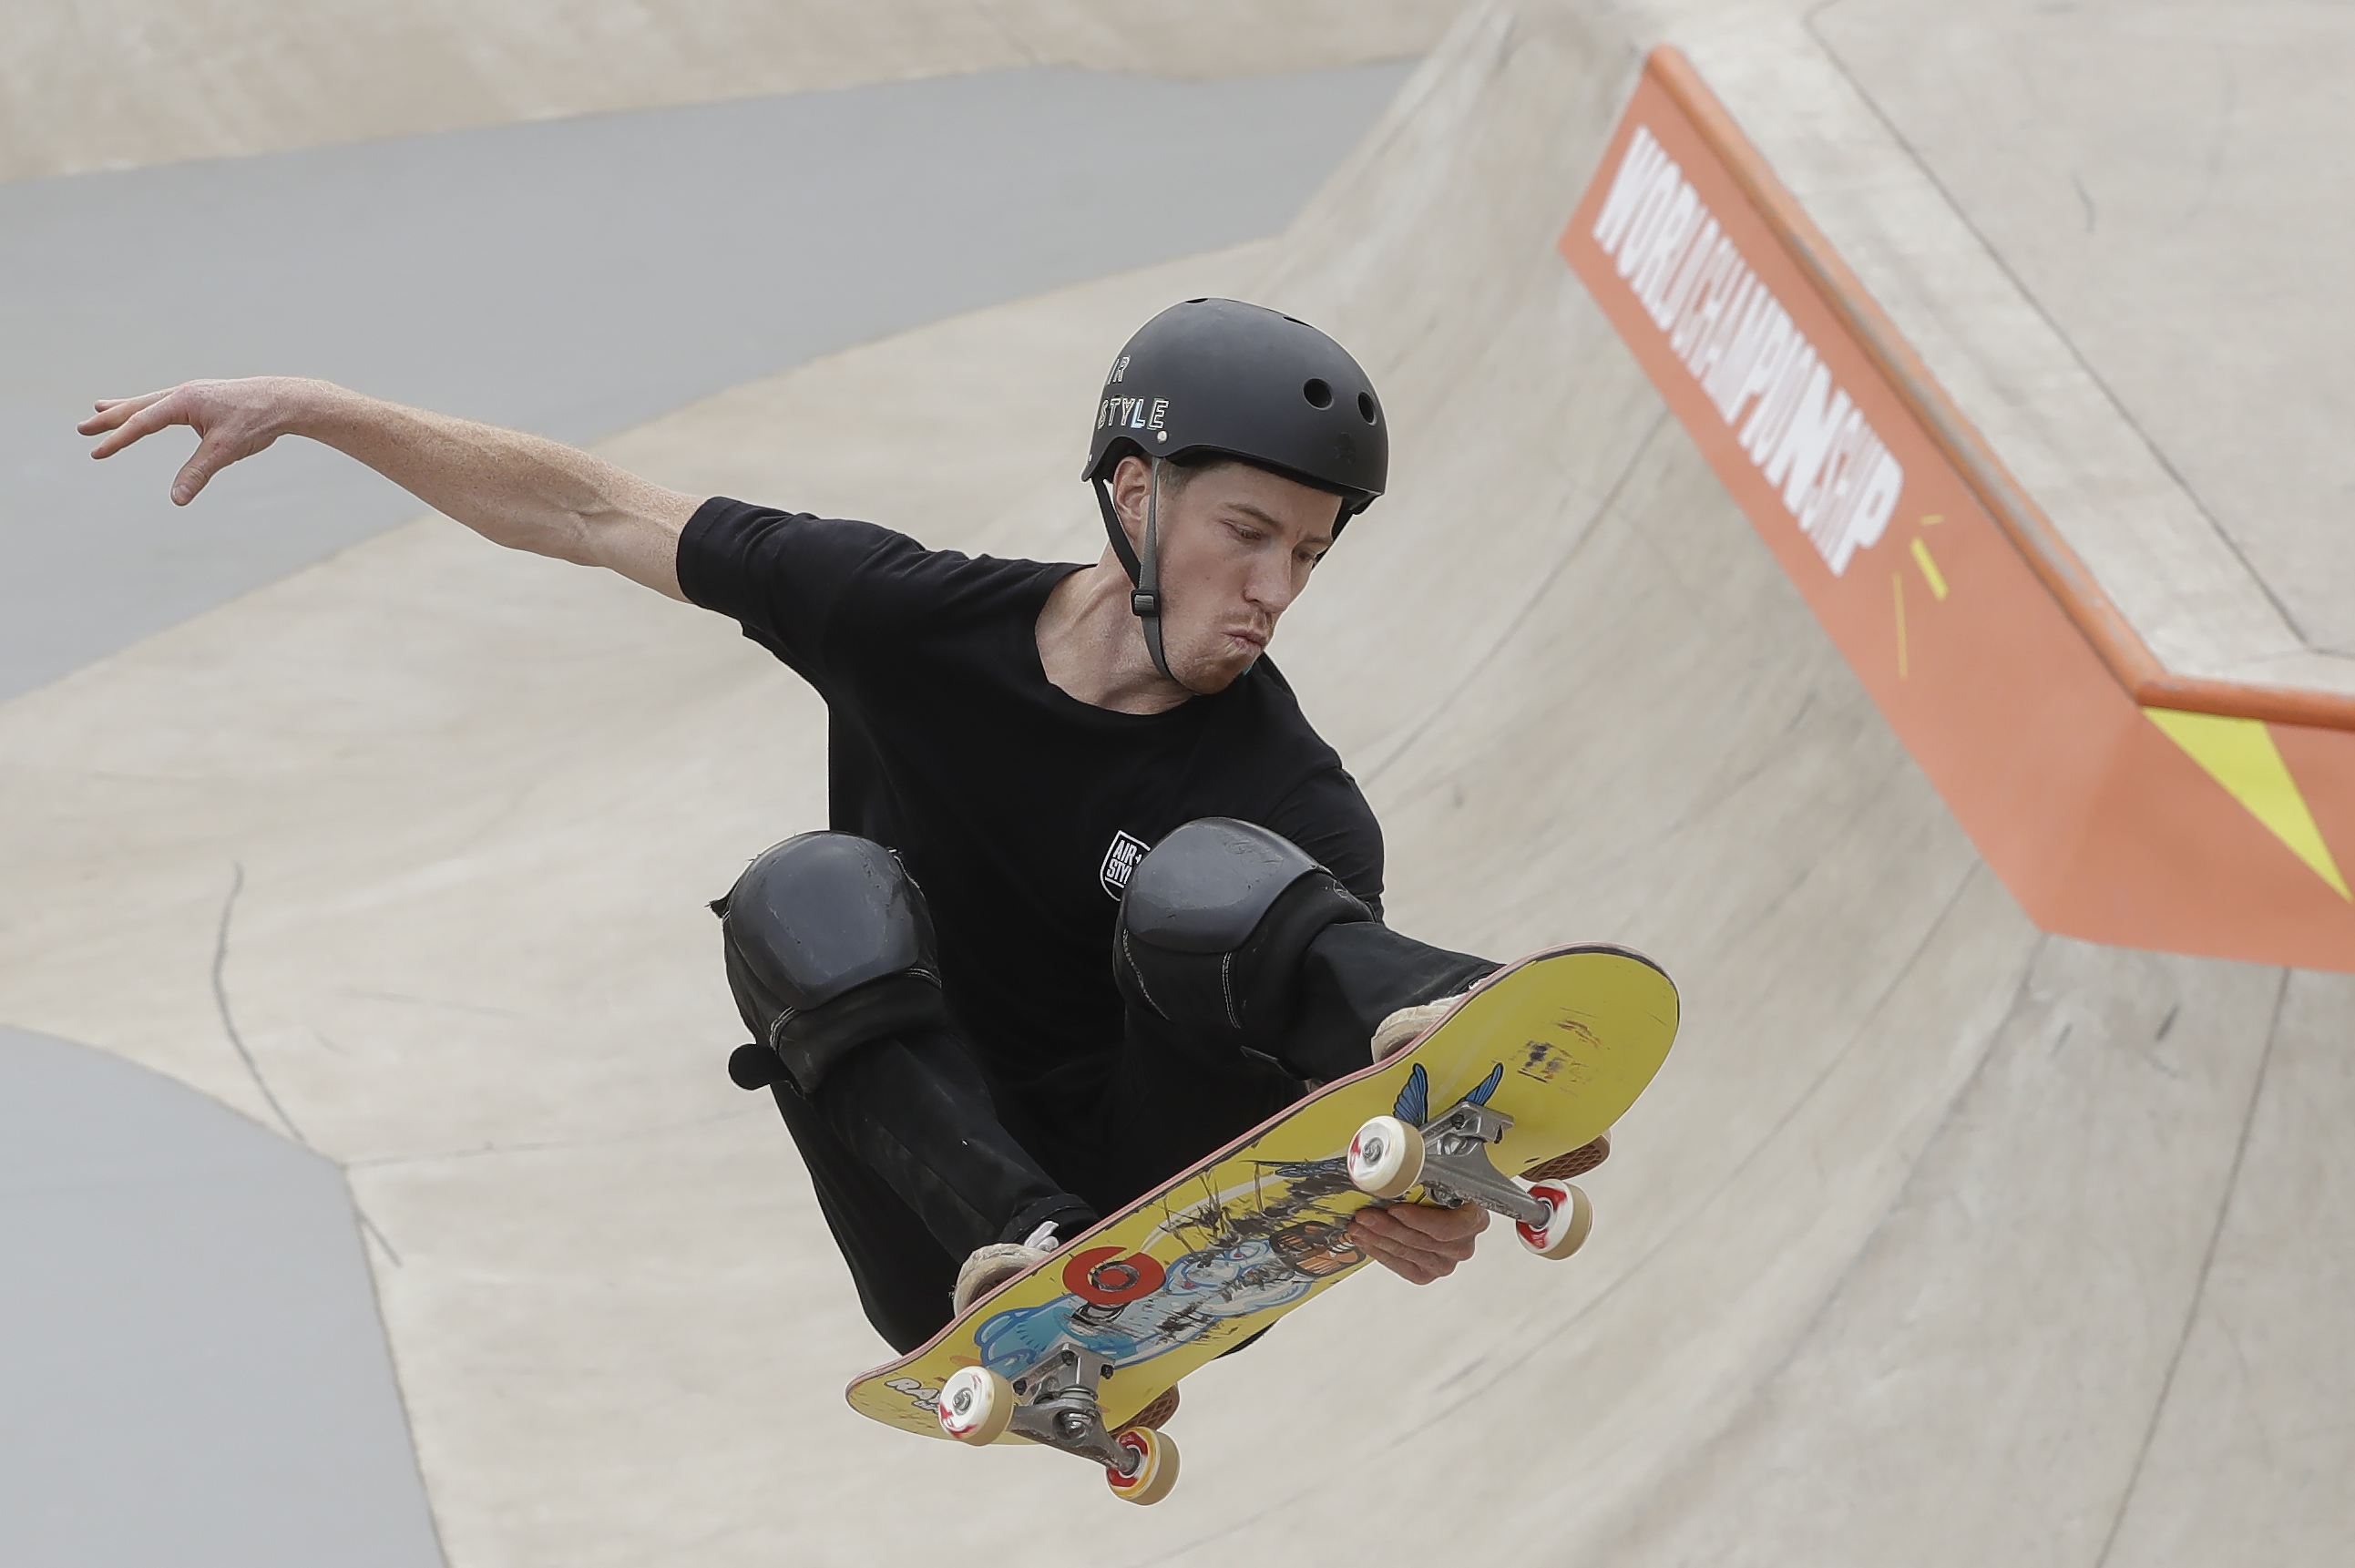 Shaun White Eliminated from 2019 Skateboarding Championships